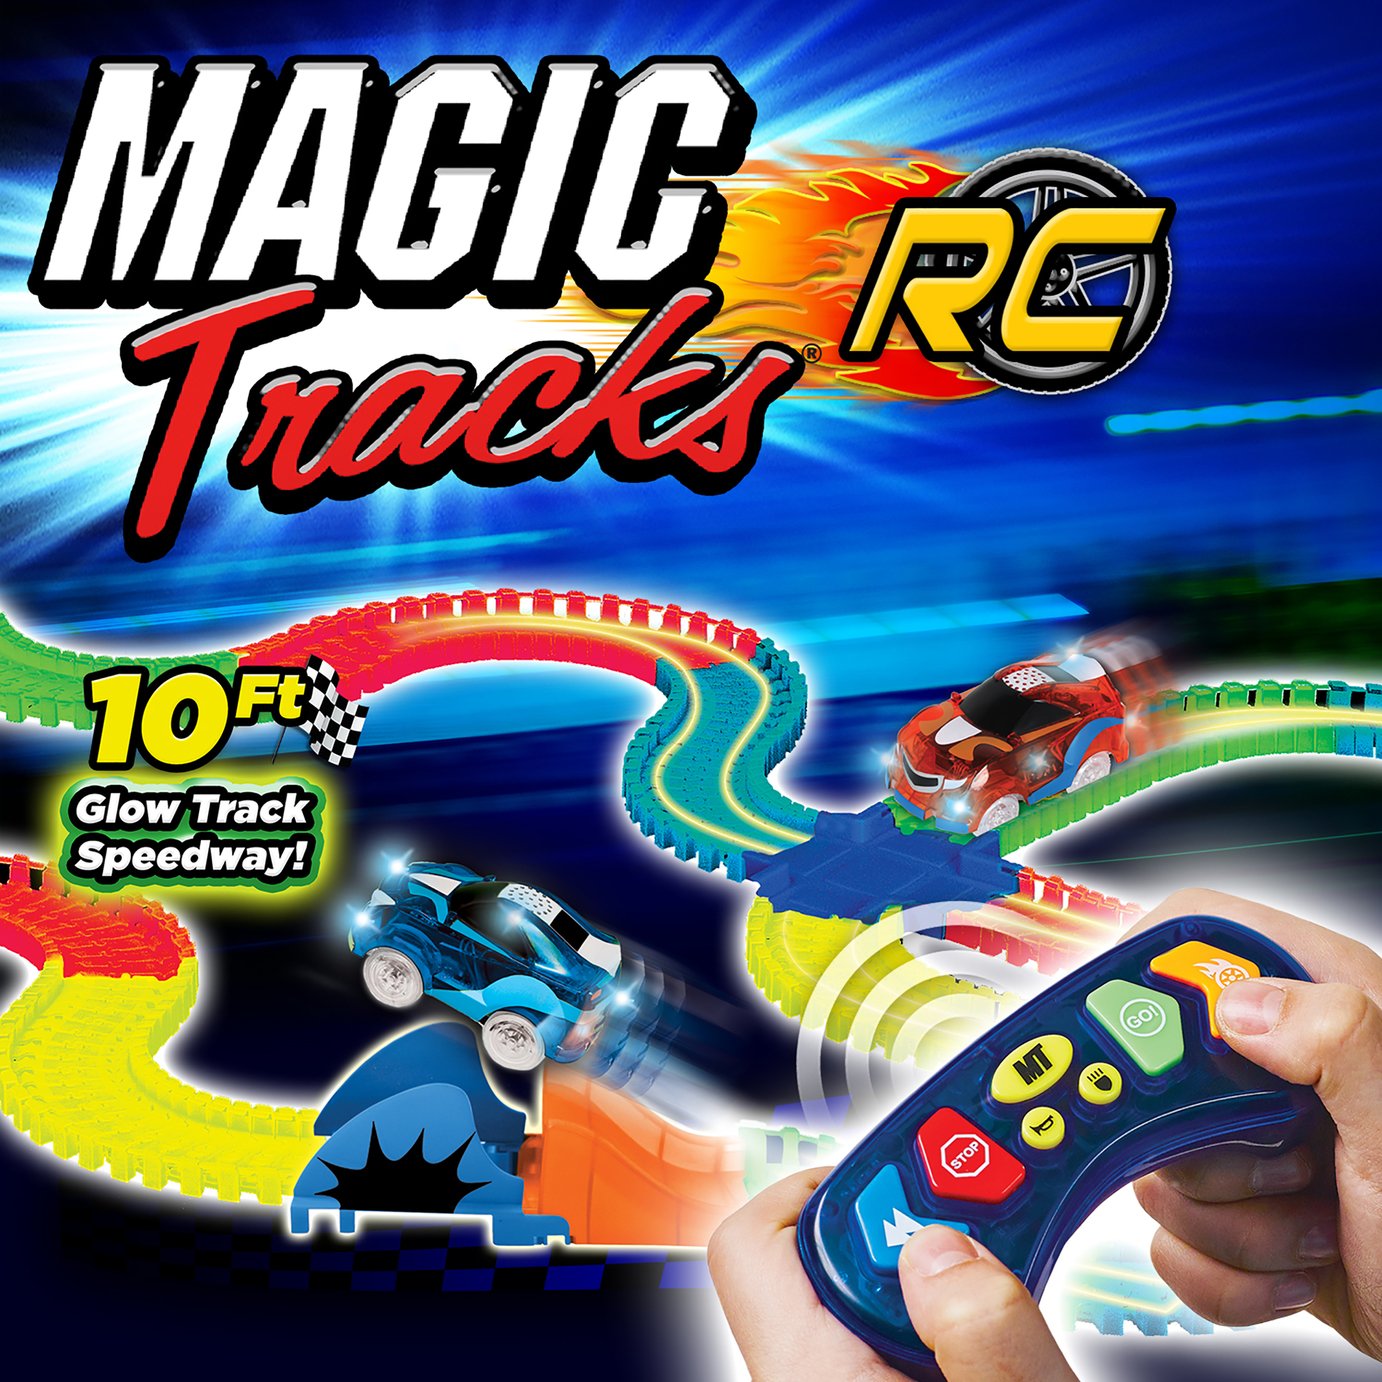 magic tracks rc car not working